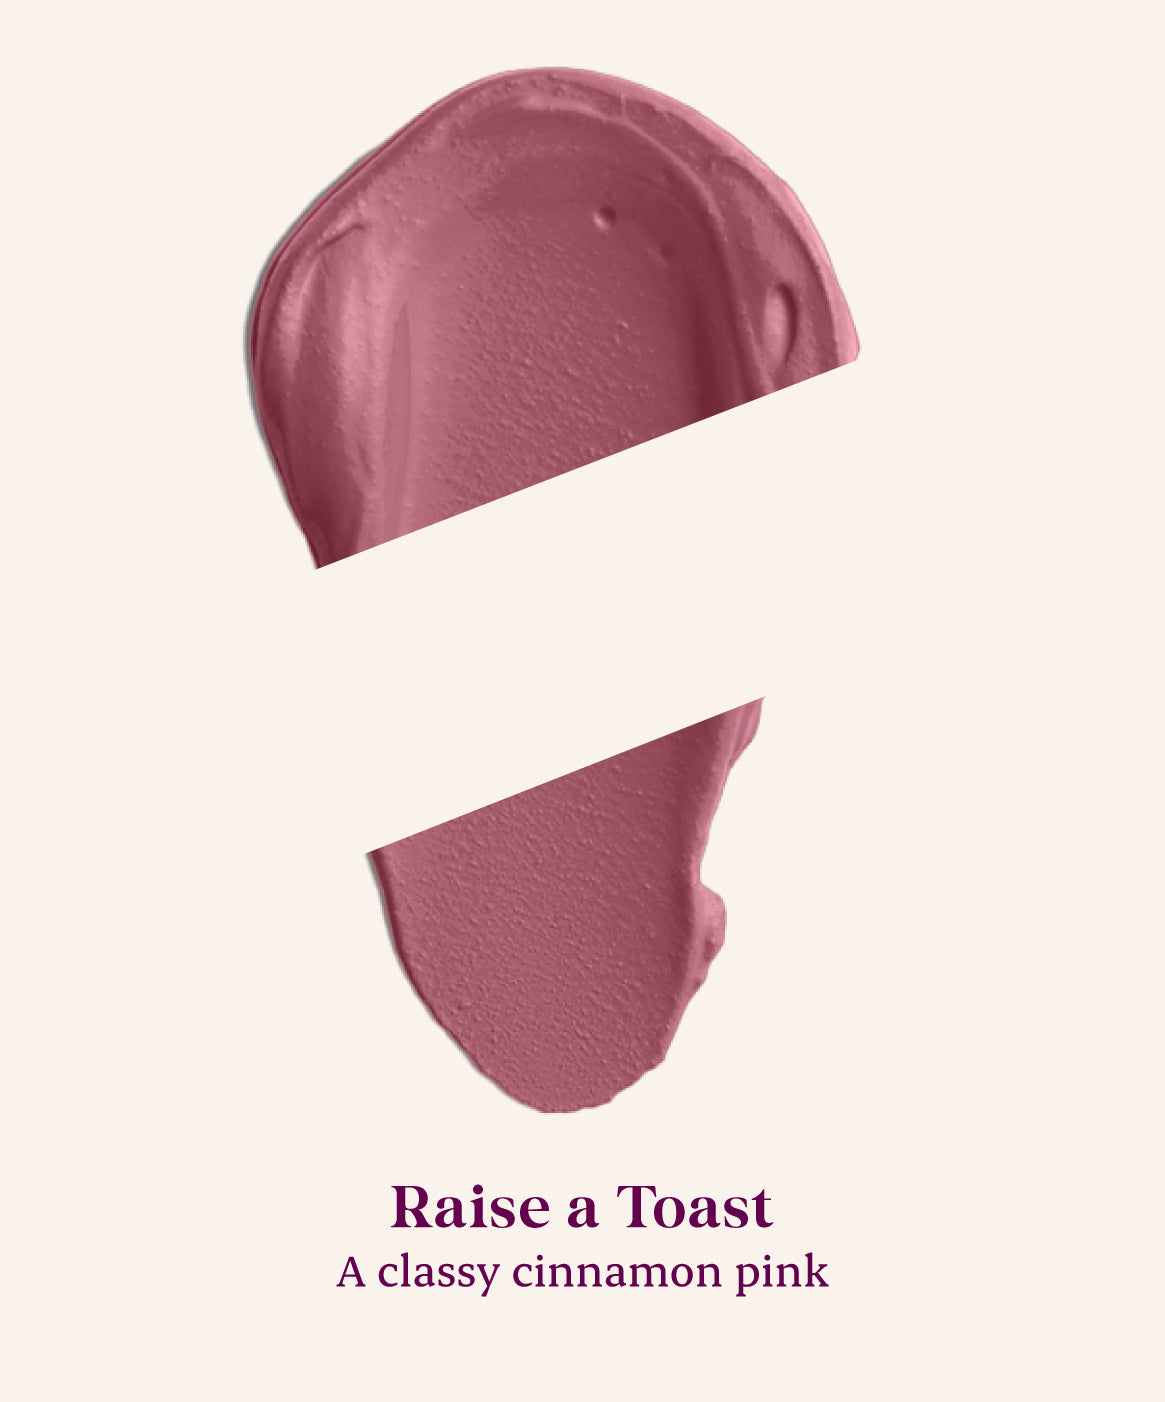 Raise A Toast 08 - Cinnamon pink